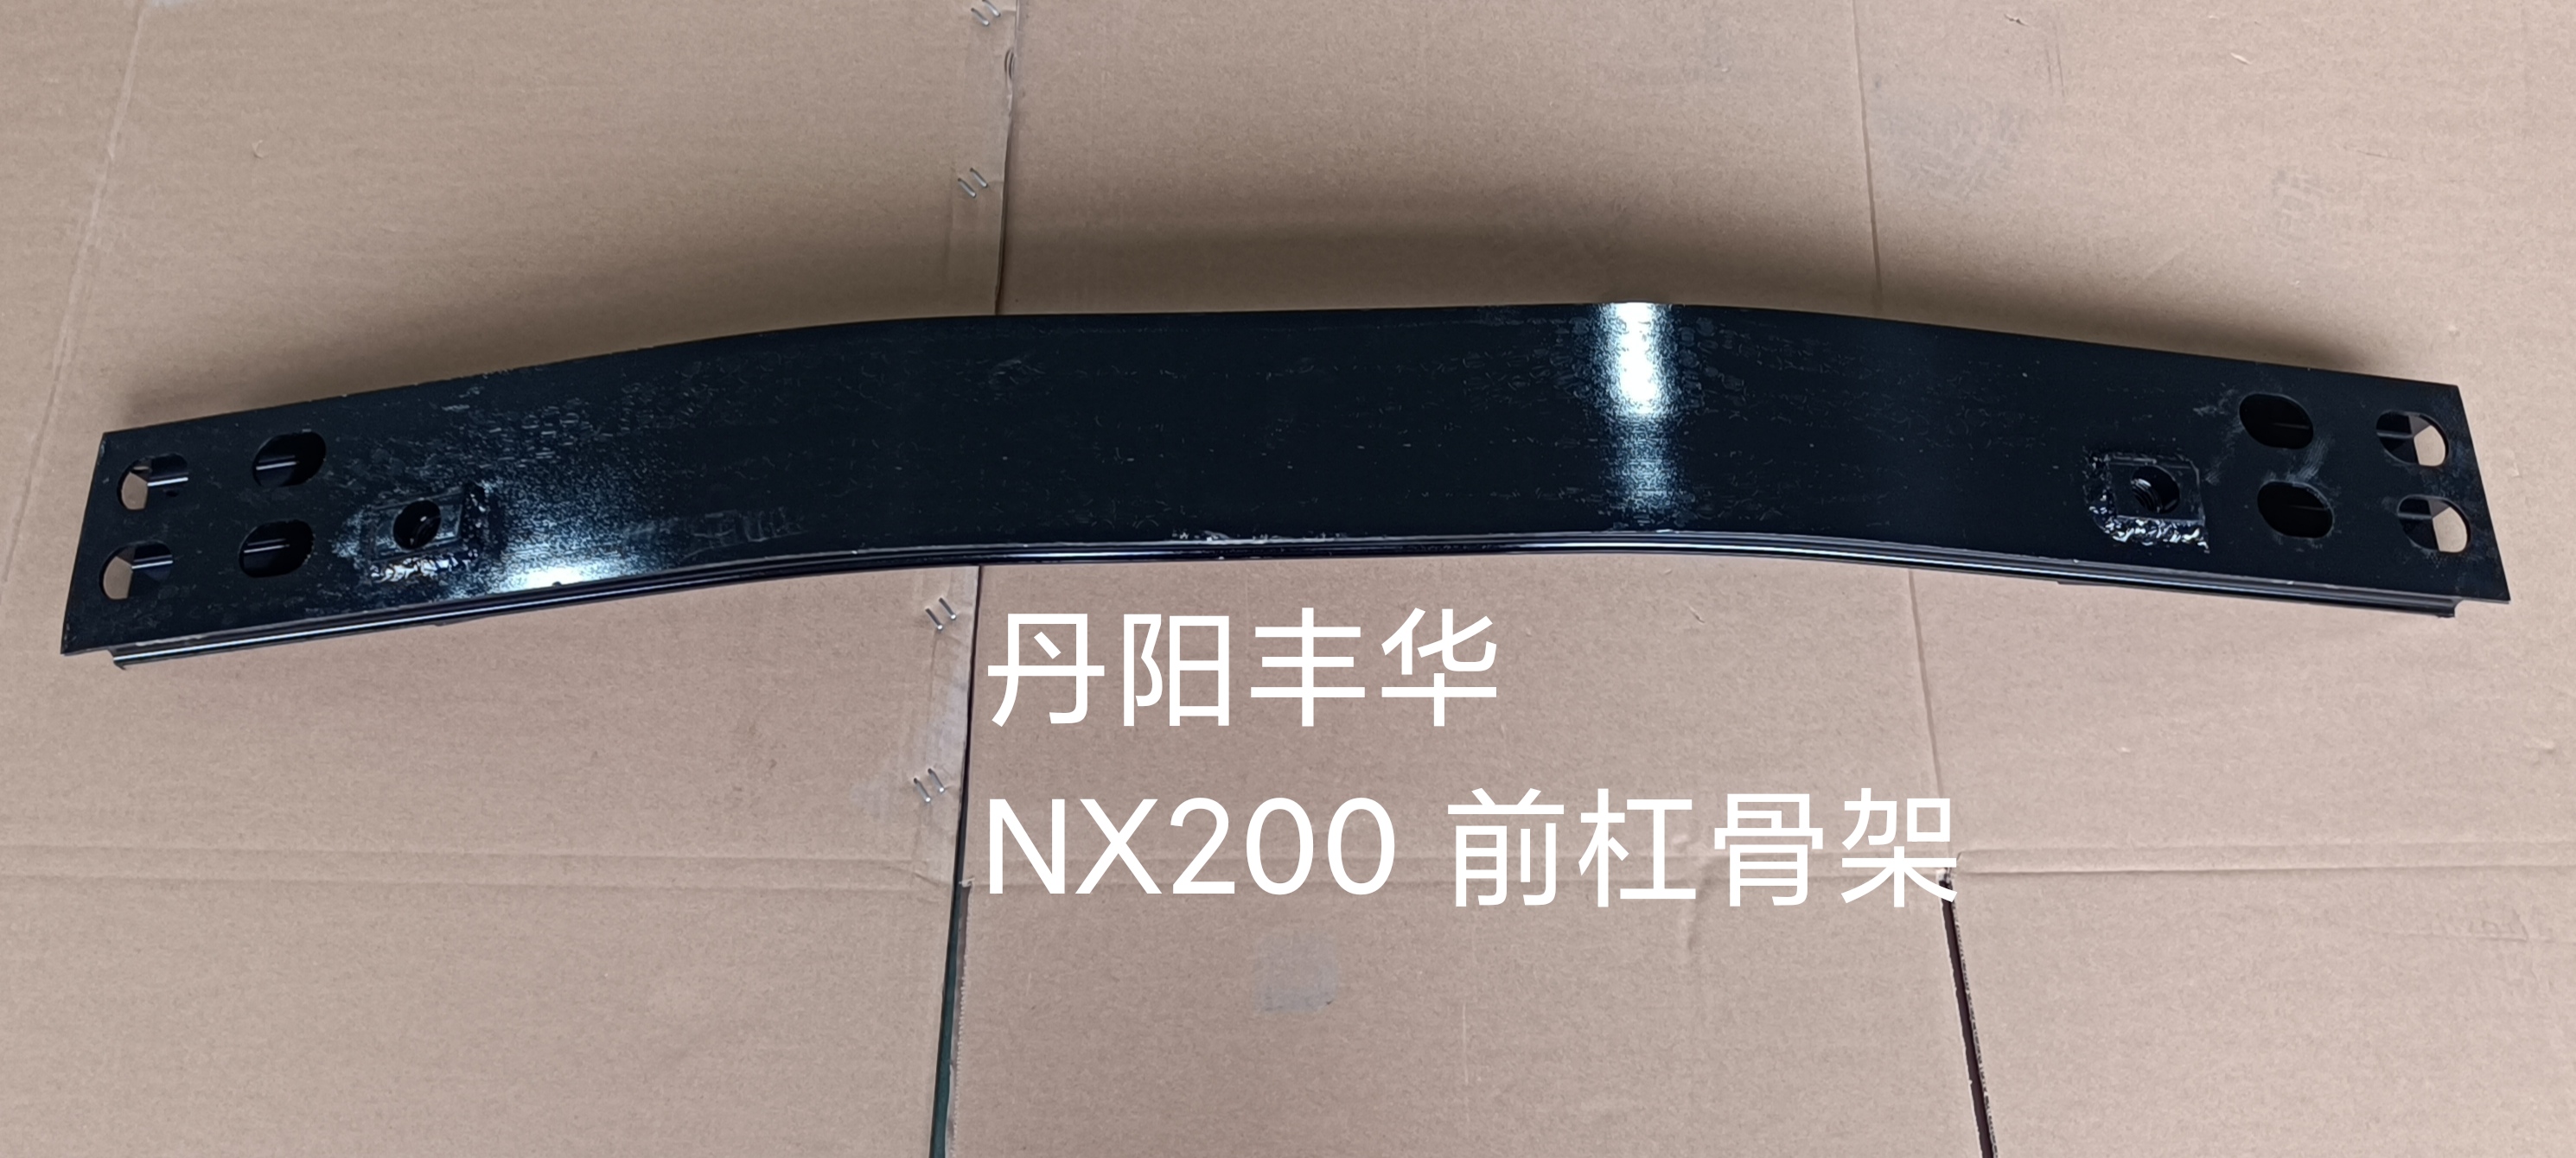 NX200 前杠骨架OEM号52021-78020需要联系